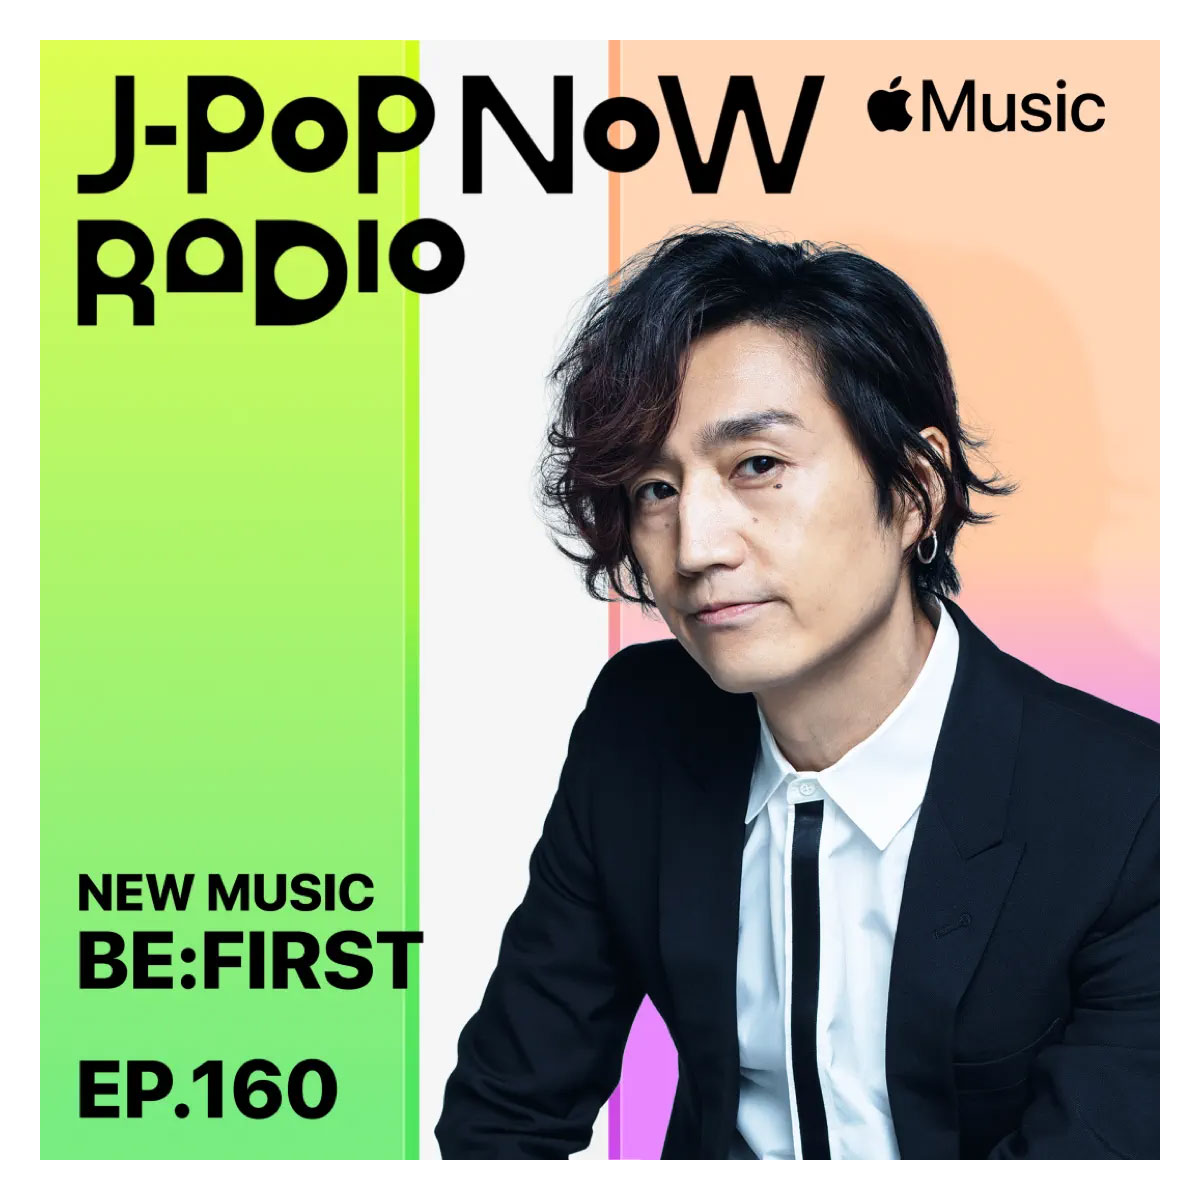 J-Pop Now Radio with Kentaro Ochiai 特集：BE:FIRST